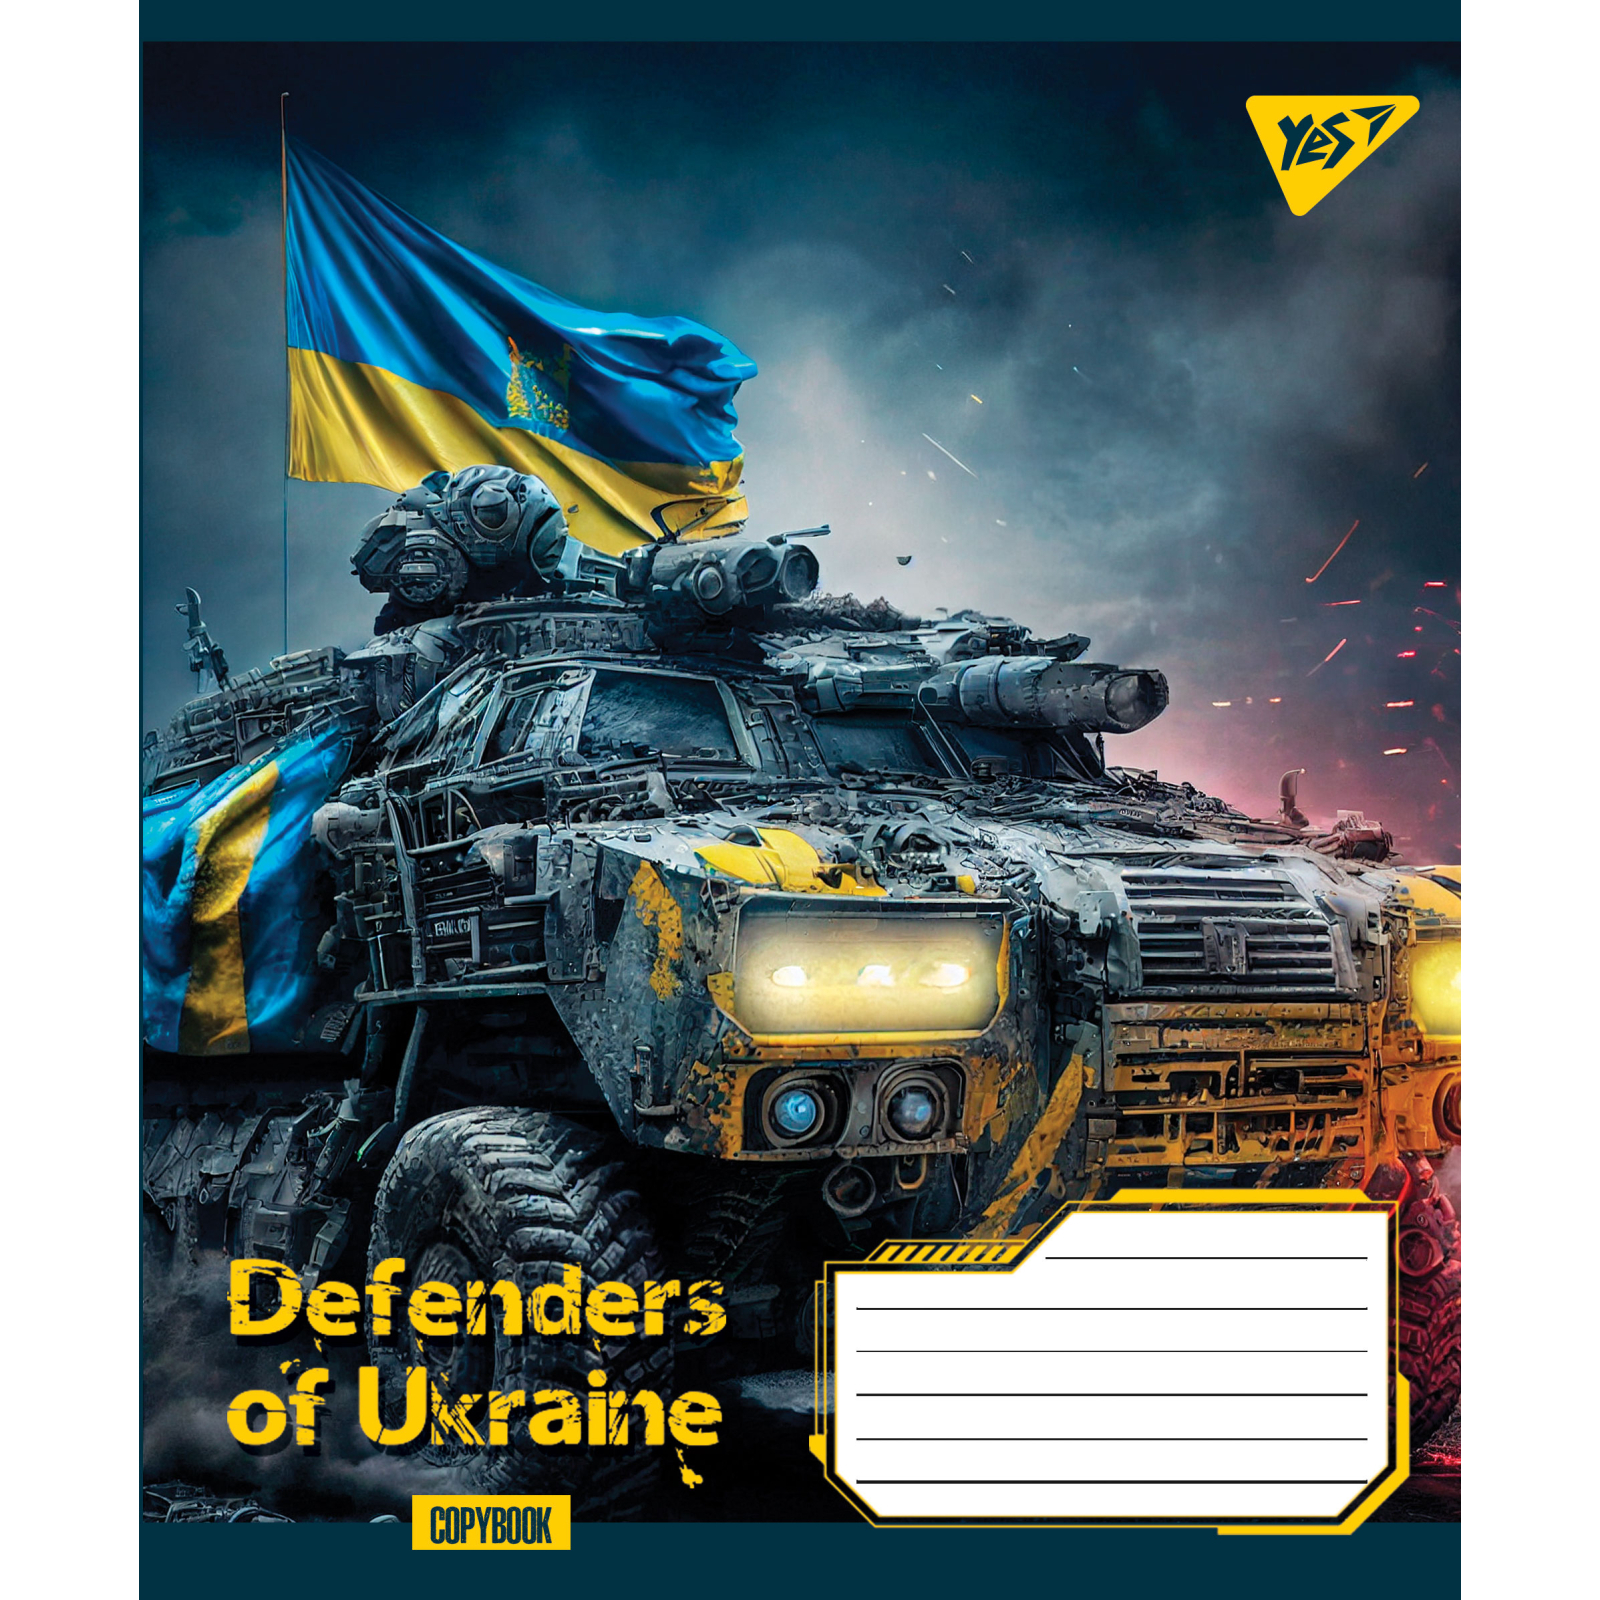 Зошит Yes А5 Defenders of Ukraine 36 аркушів, лінія (766426) зображення 3